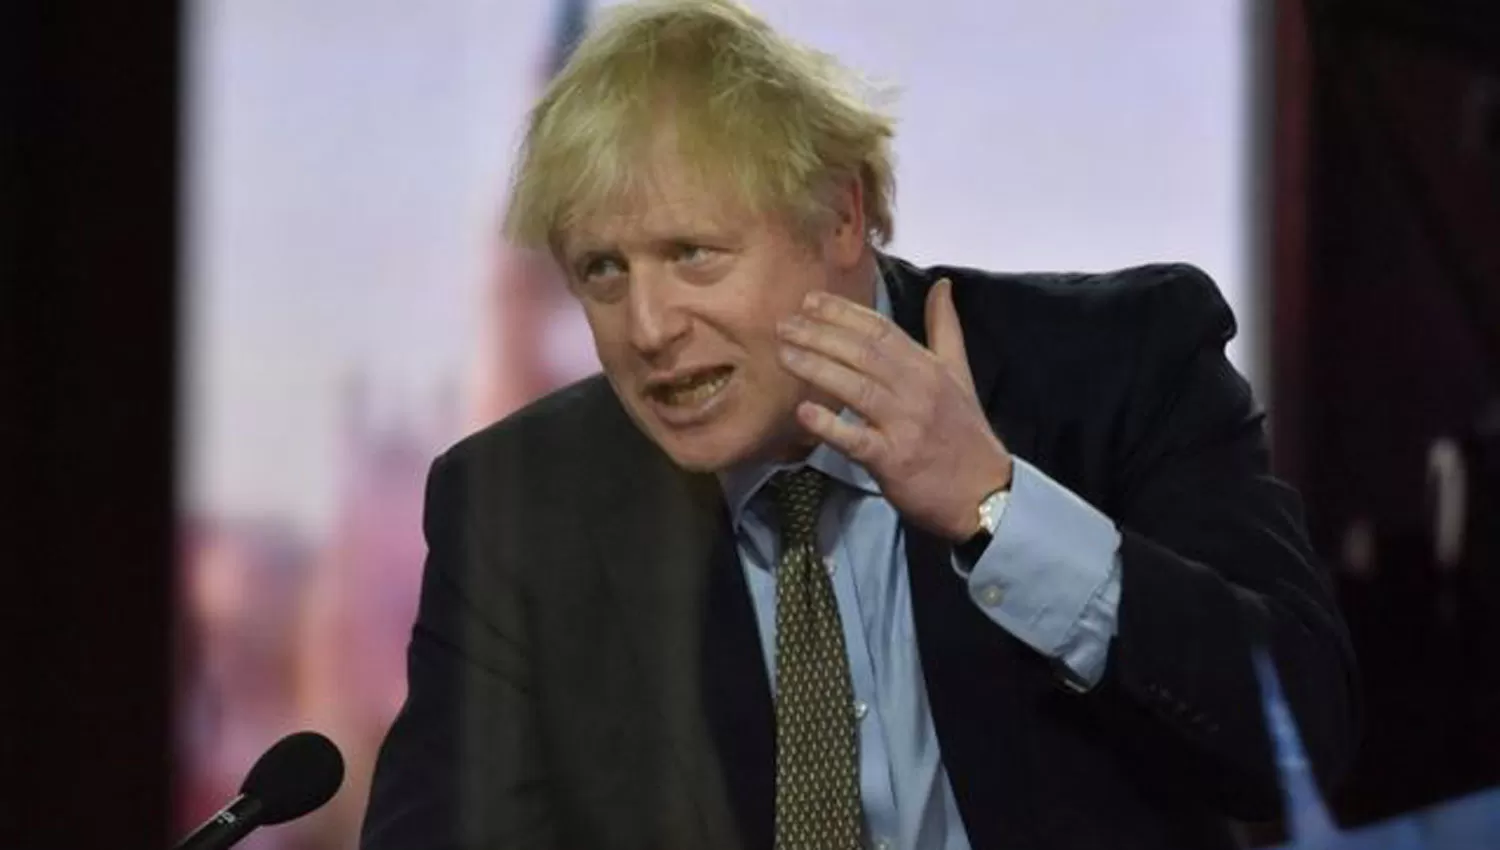 RECUPERADO. El primer ministro Boris Johnson estuvo una semana internado en 2020 por un cuadro agudo de coronavirus.